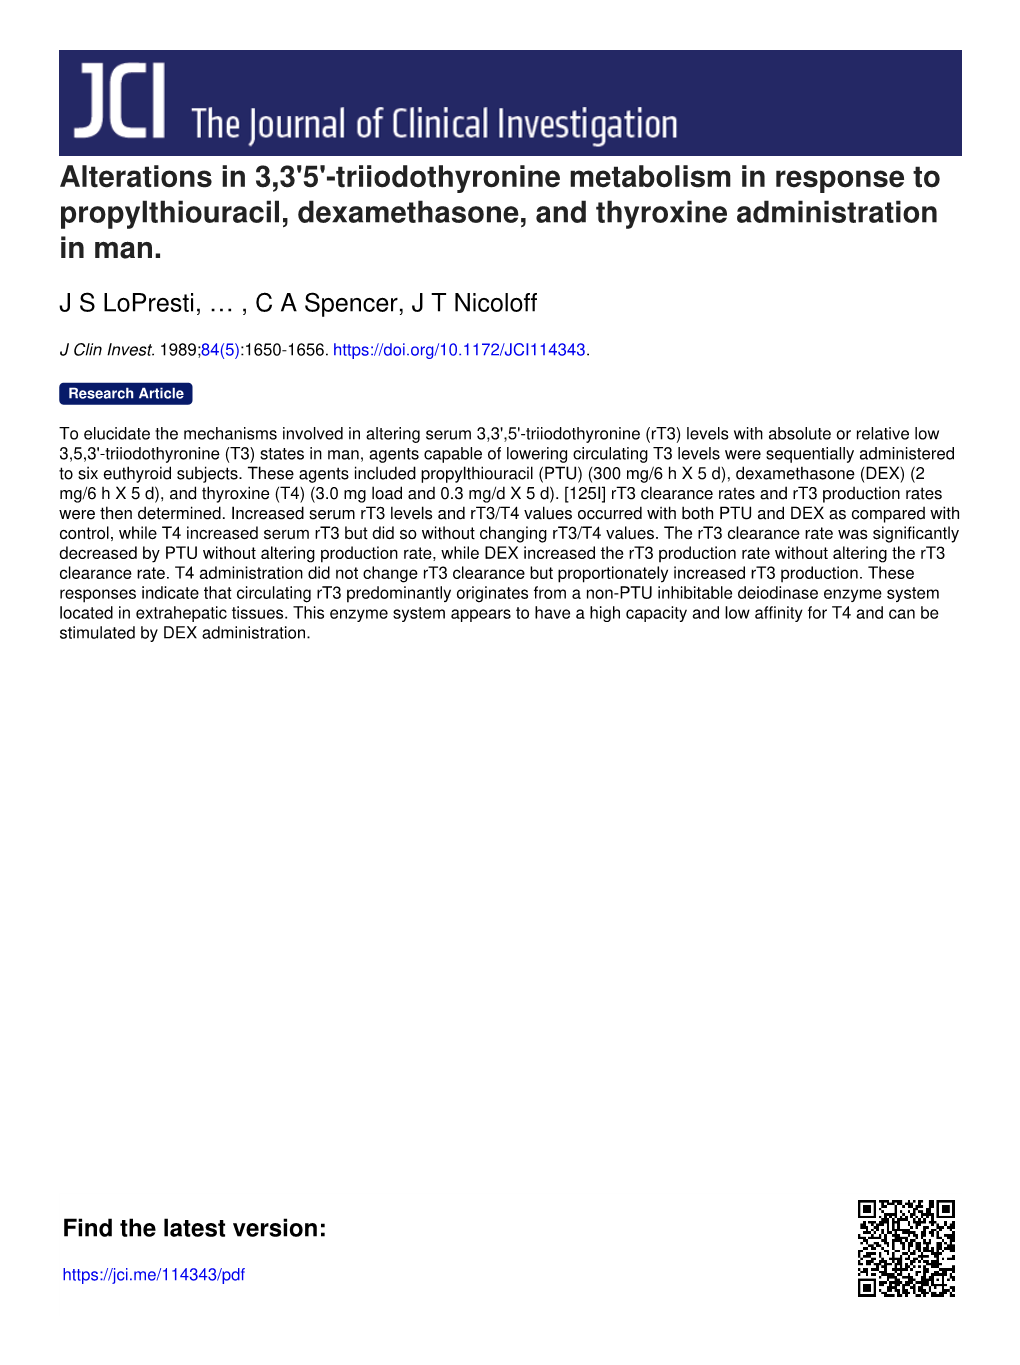 Triiodothyronine Metabolism in Response to Propylthiouracil, Dexamethasone, and Thyroxine Administration in Man